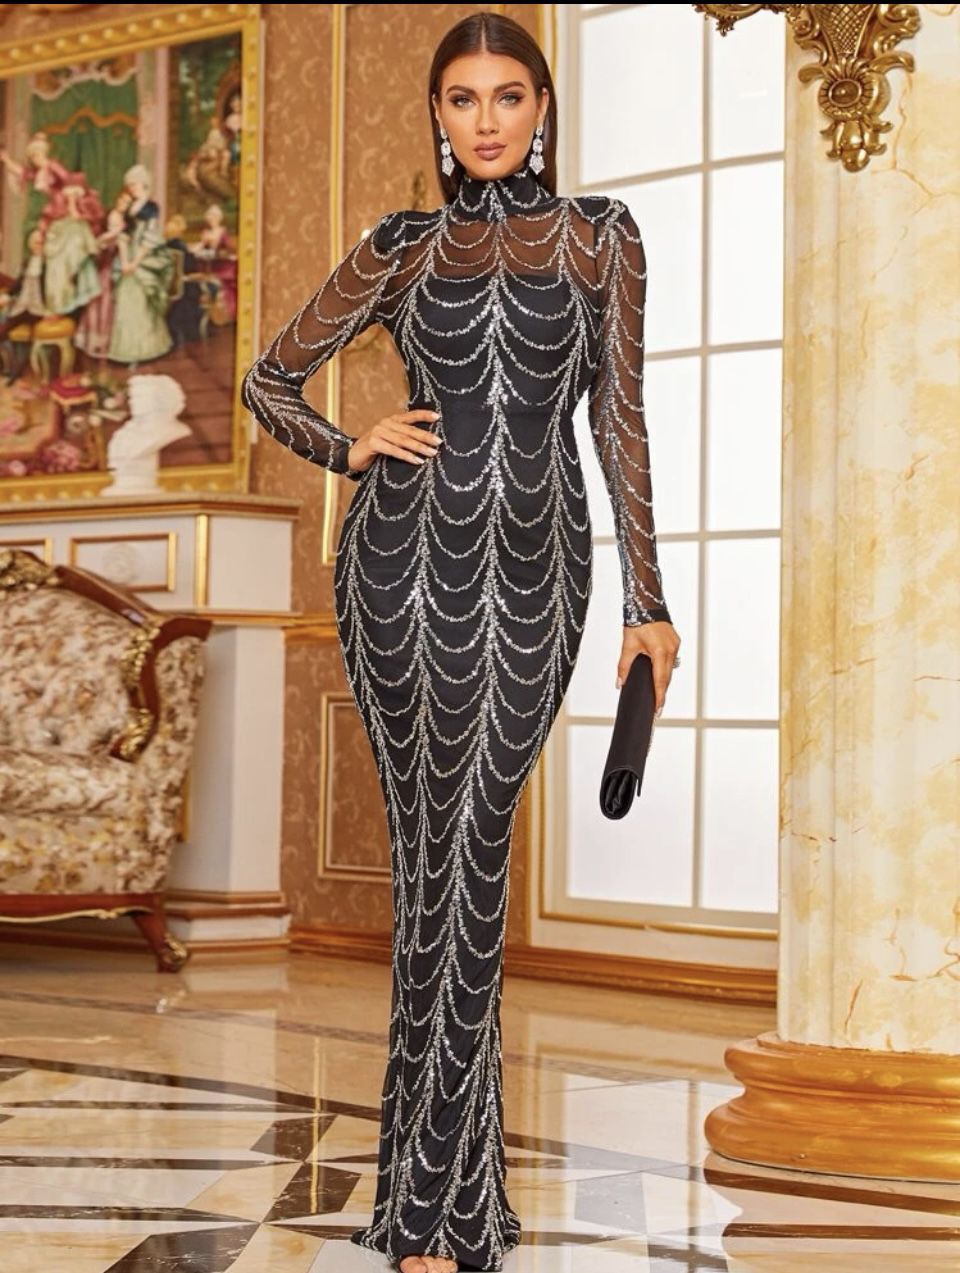 Sheer Mesh Sequin Black Dress 